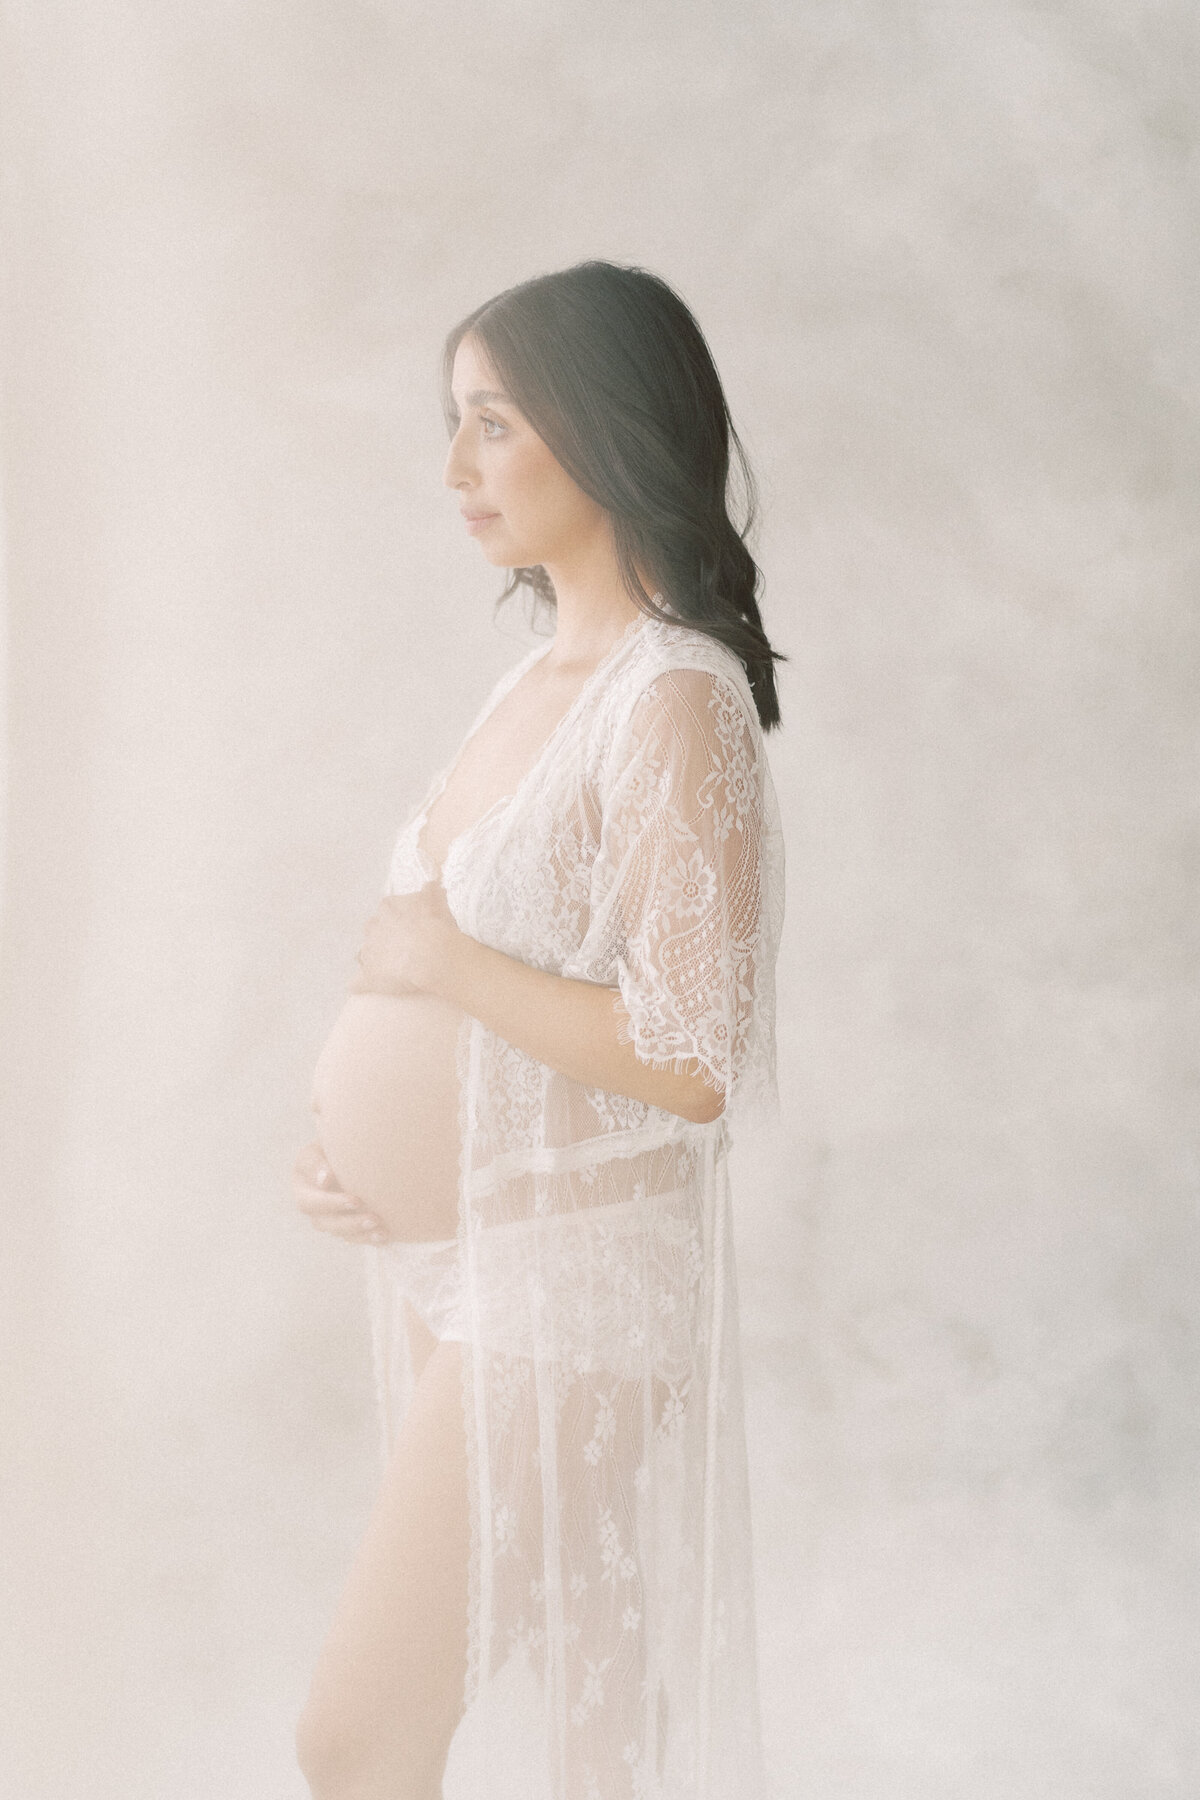 Fresno-Intimate-Maternity-Photographer-40